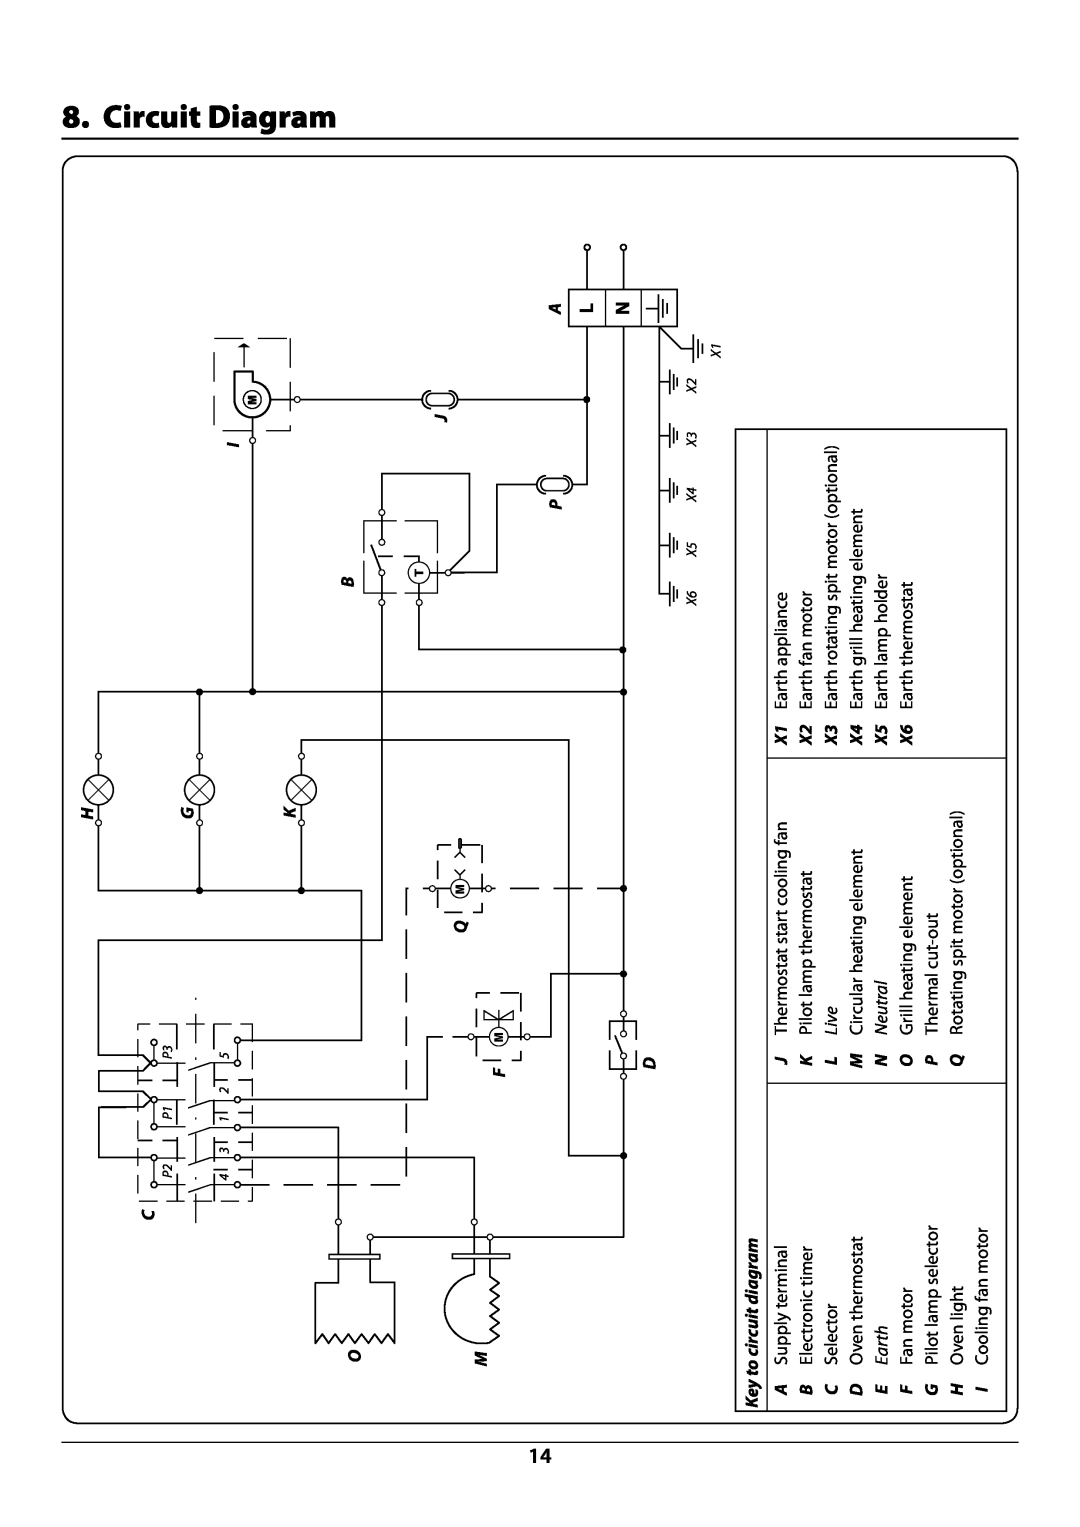 Rangemaster manual Circuit Diagram, DocNo, Key to circuit diagram, 094-0001, L Live, Circuit diagram R604/R609 oven 